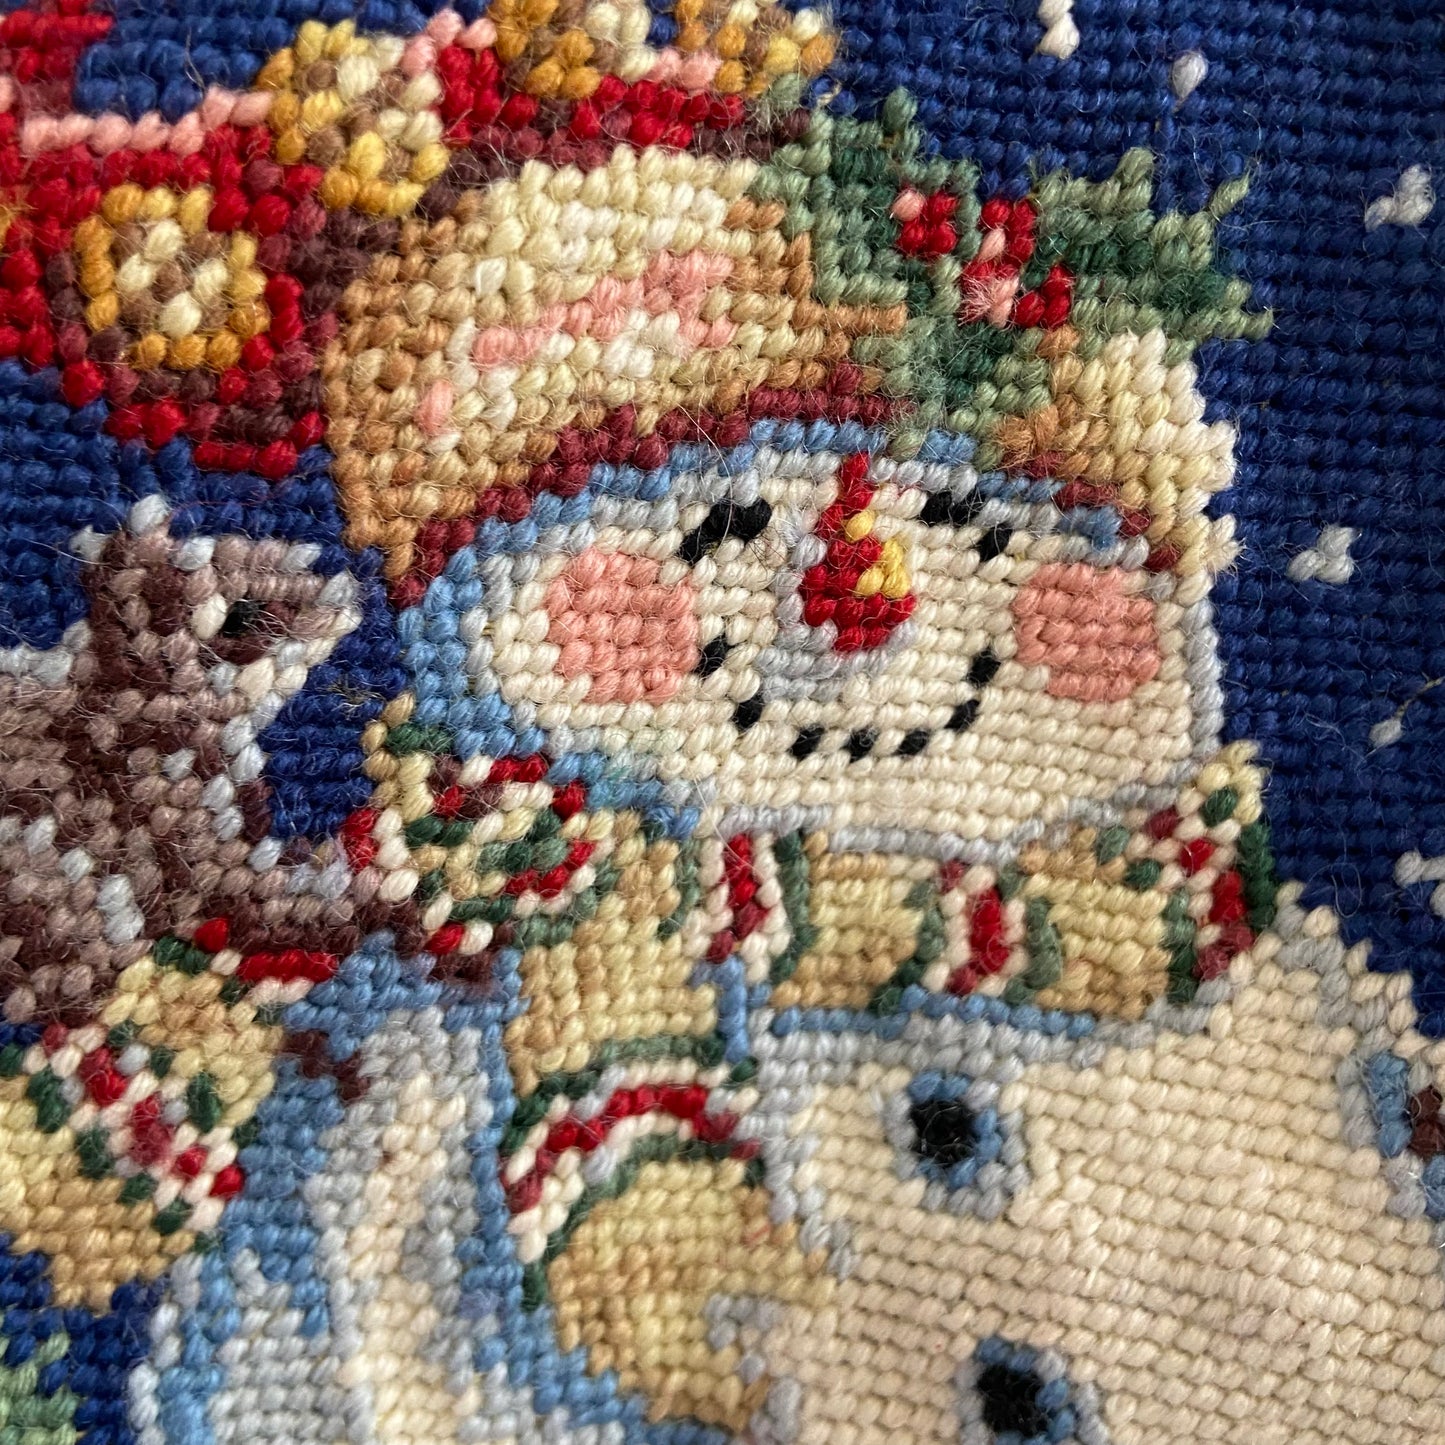 custom vintage needlepoint Christmas holiday stocking monogrammed for “Kathy“